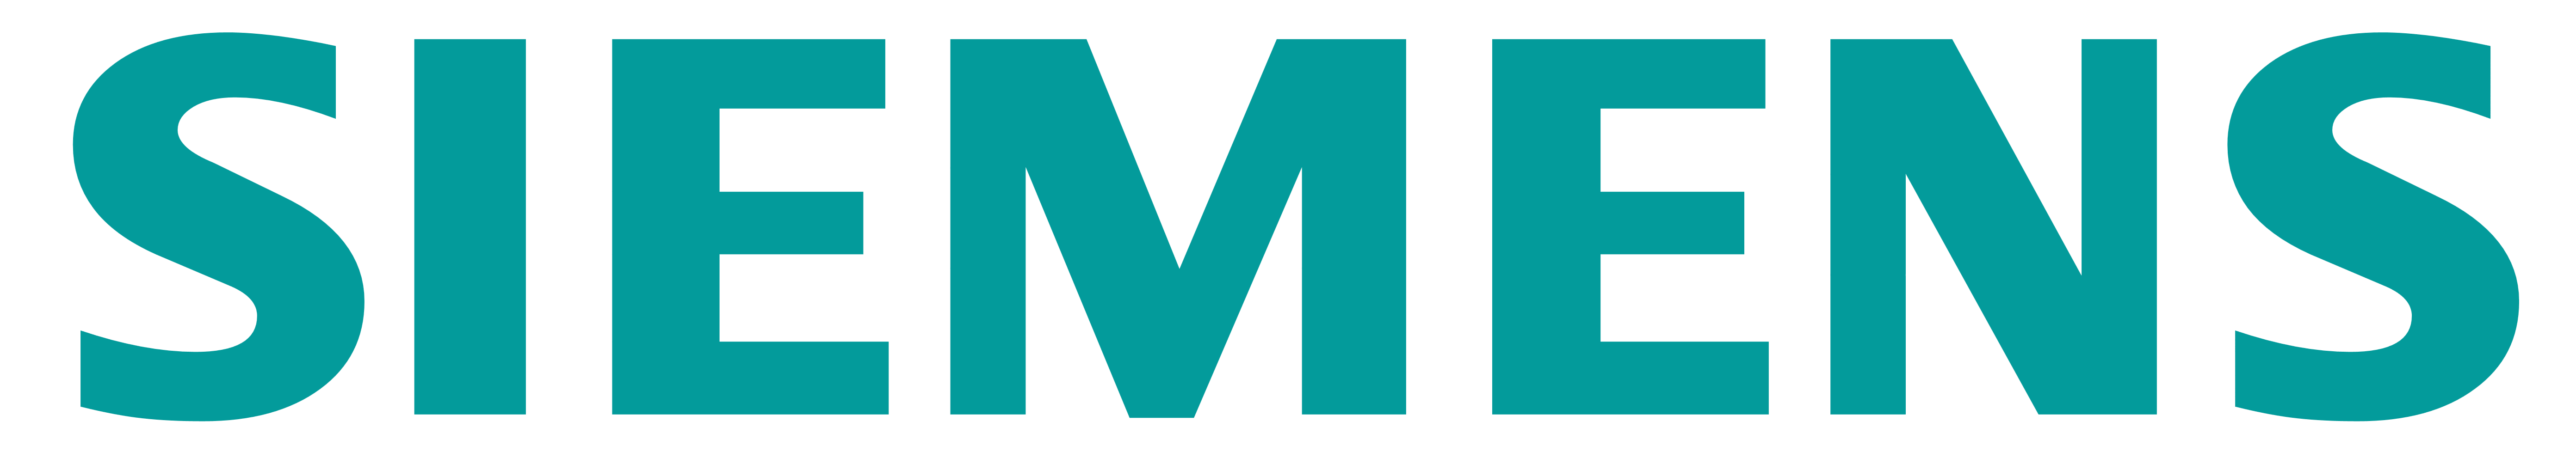 Siemens_logo_PNG1.png